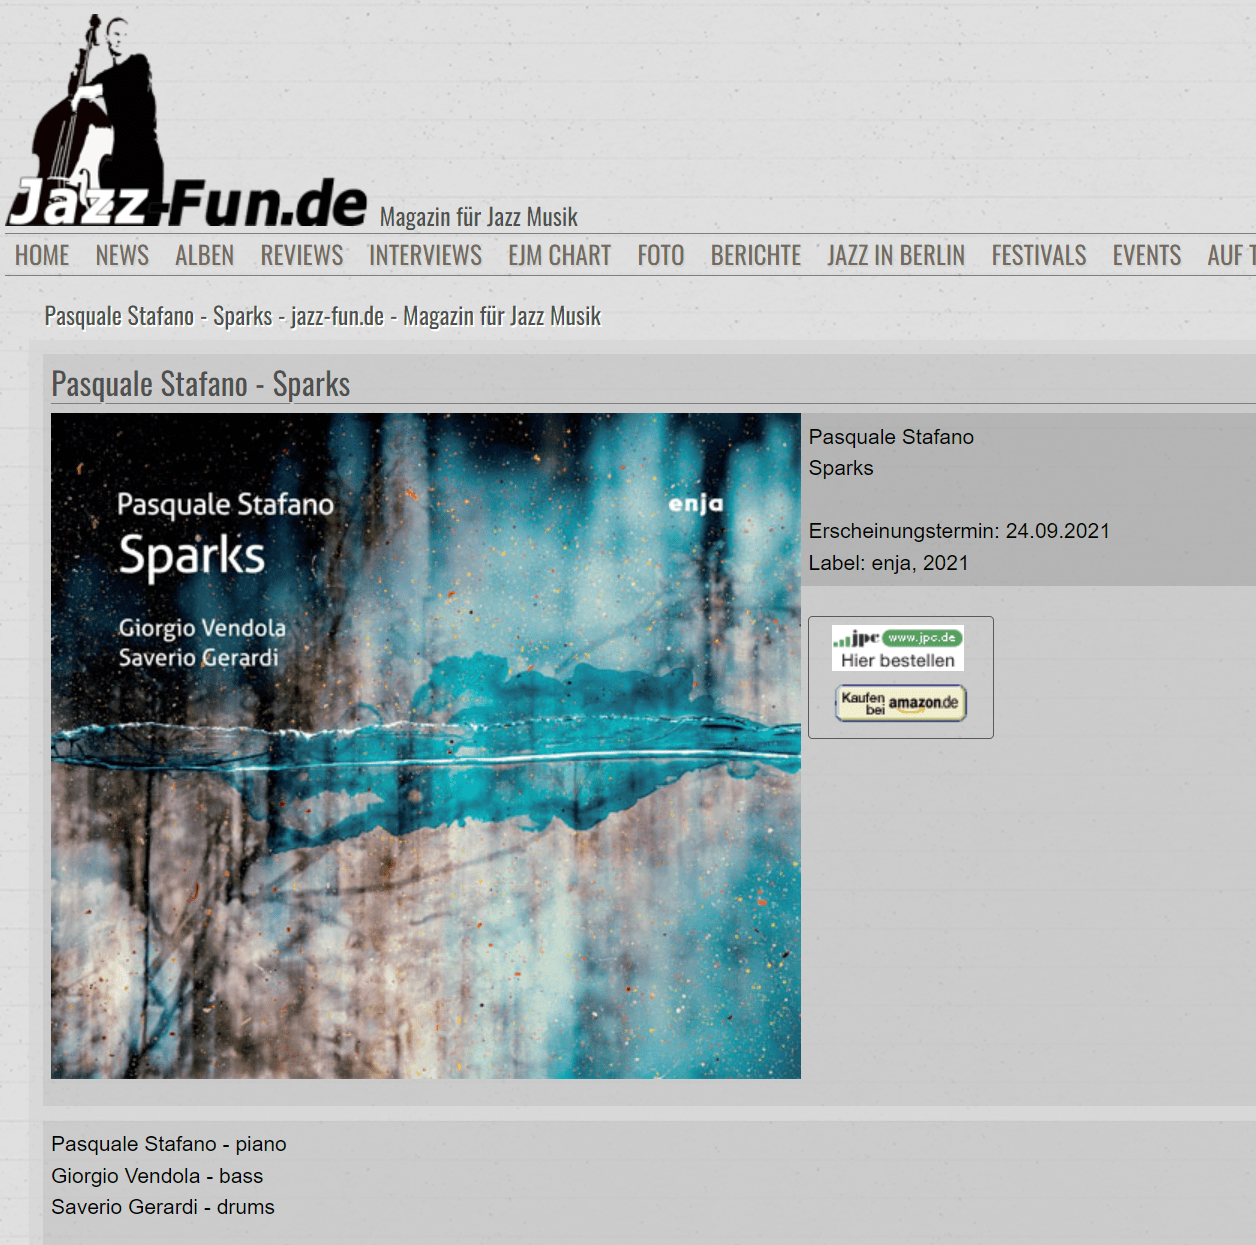 Pasquale Stafano - Sparks - Jazz-Fun.de